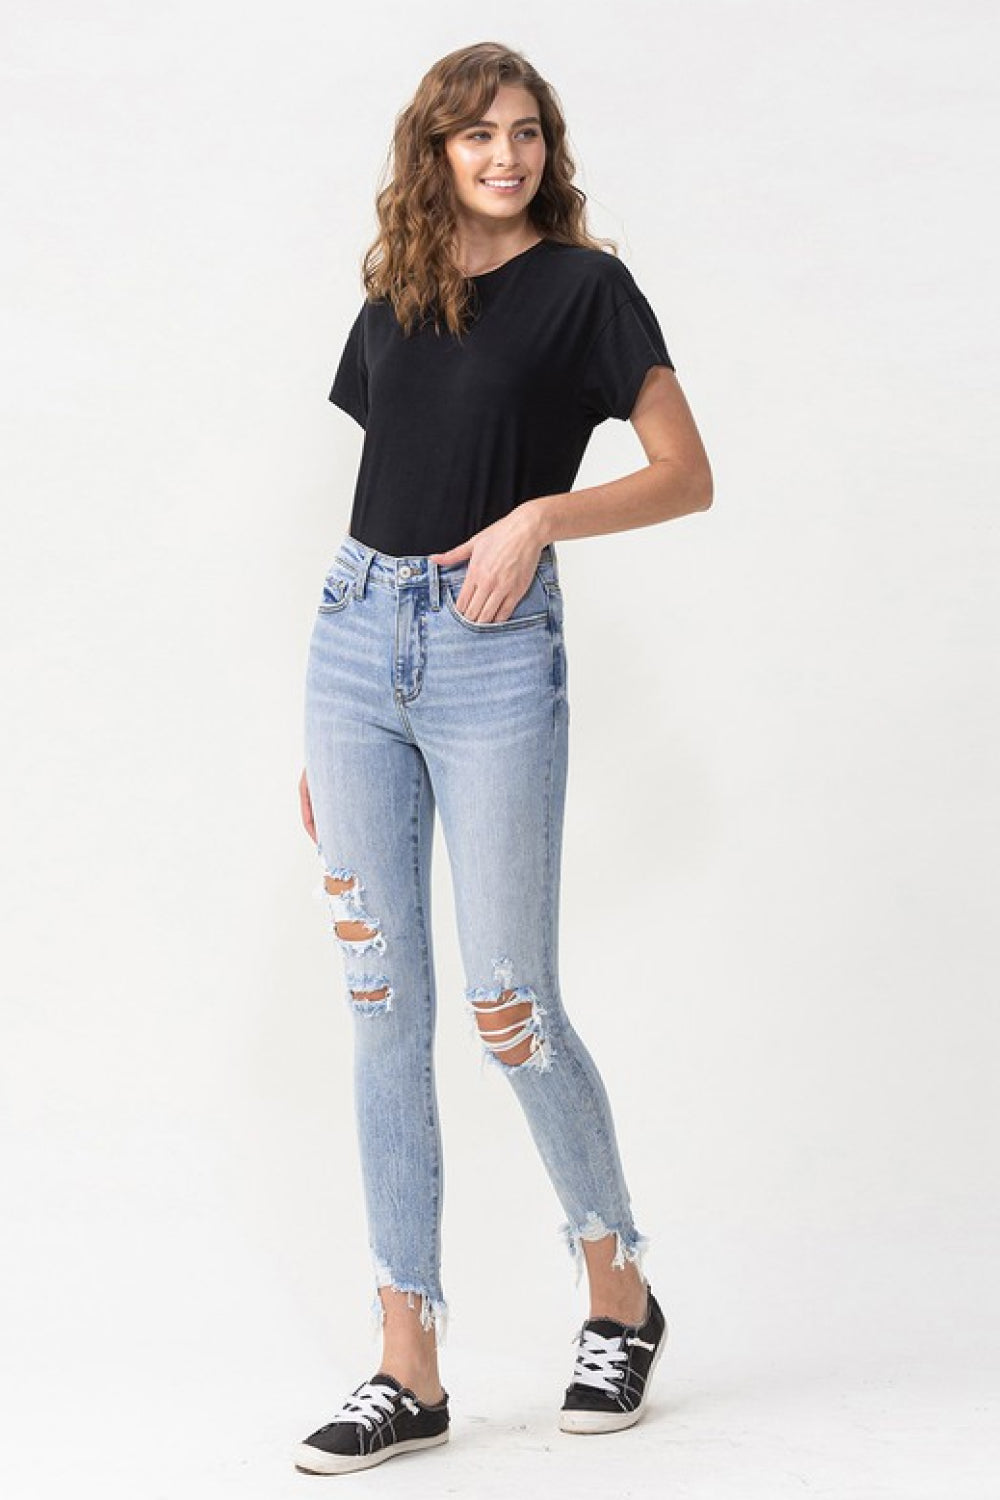 Lovervet Full Size Lauren Distressed High Rise Skinny Jeans - Make'm Blush Boutique 